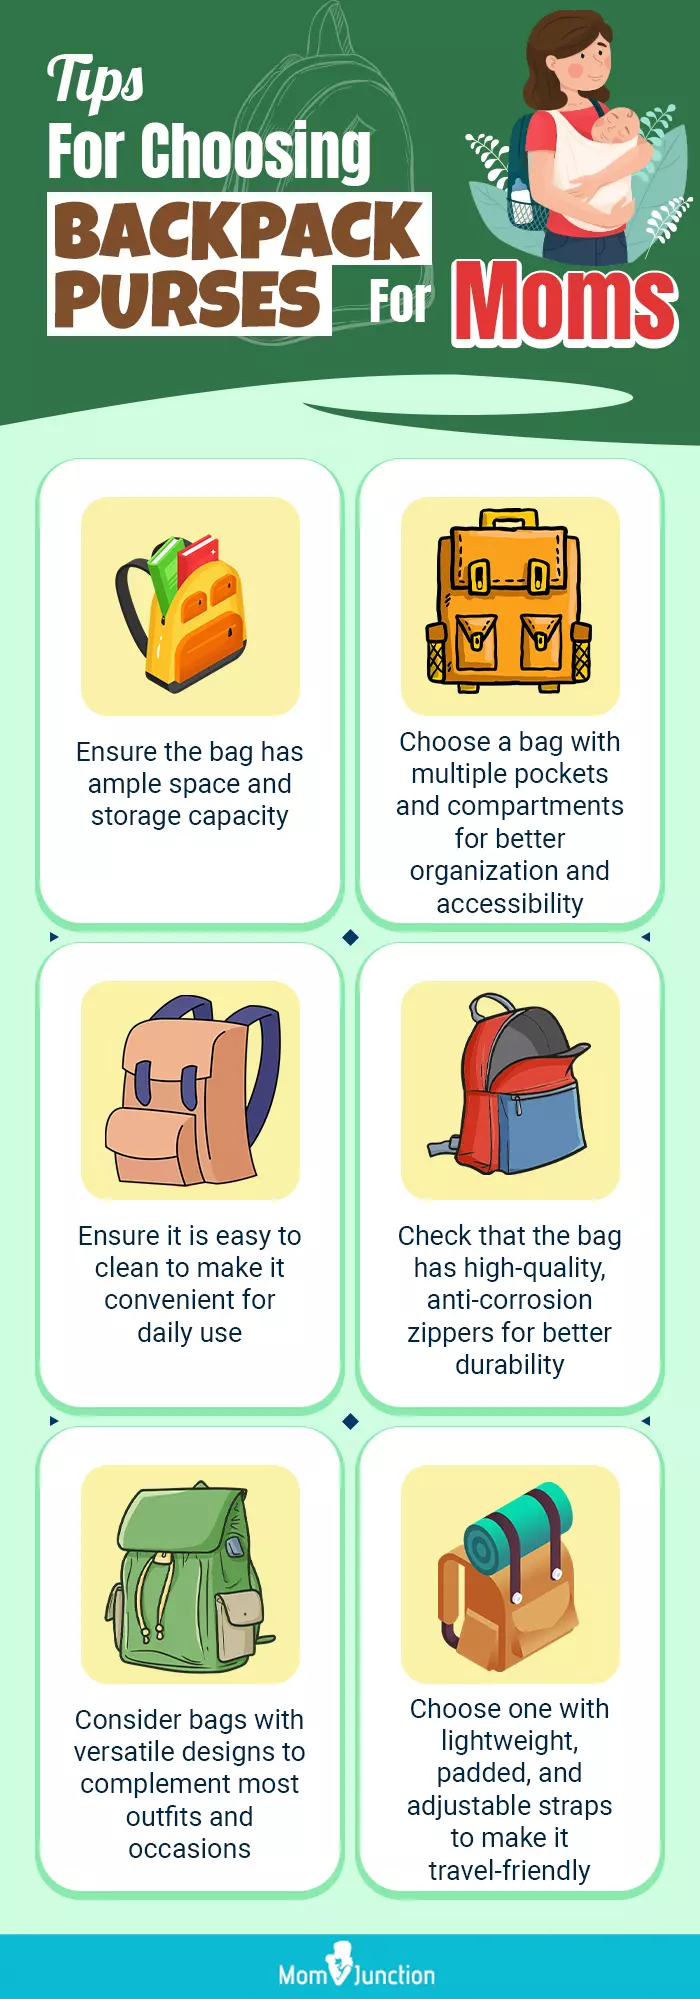 Tips For Choosing Backpack Purses For Moms